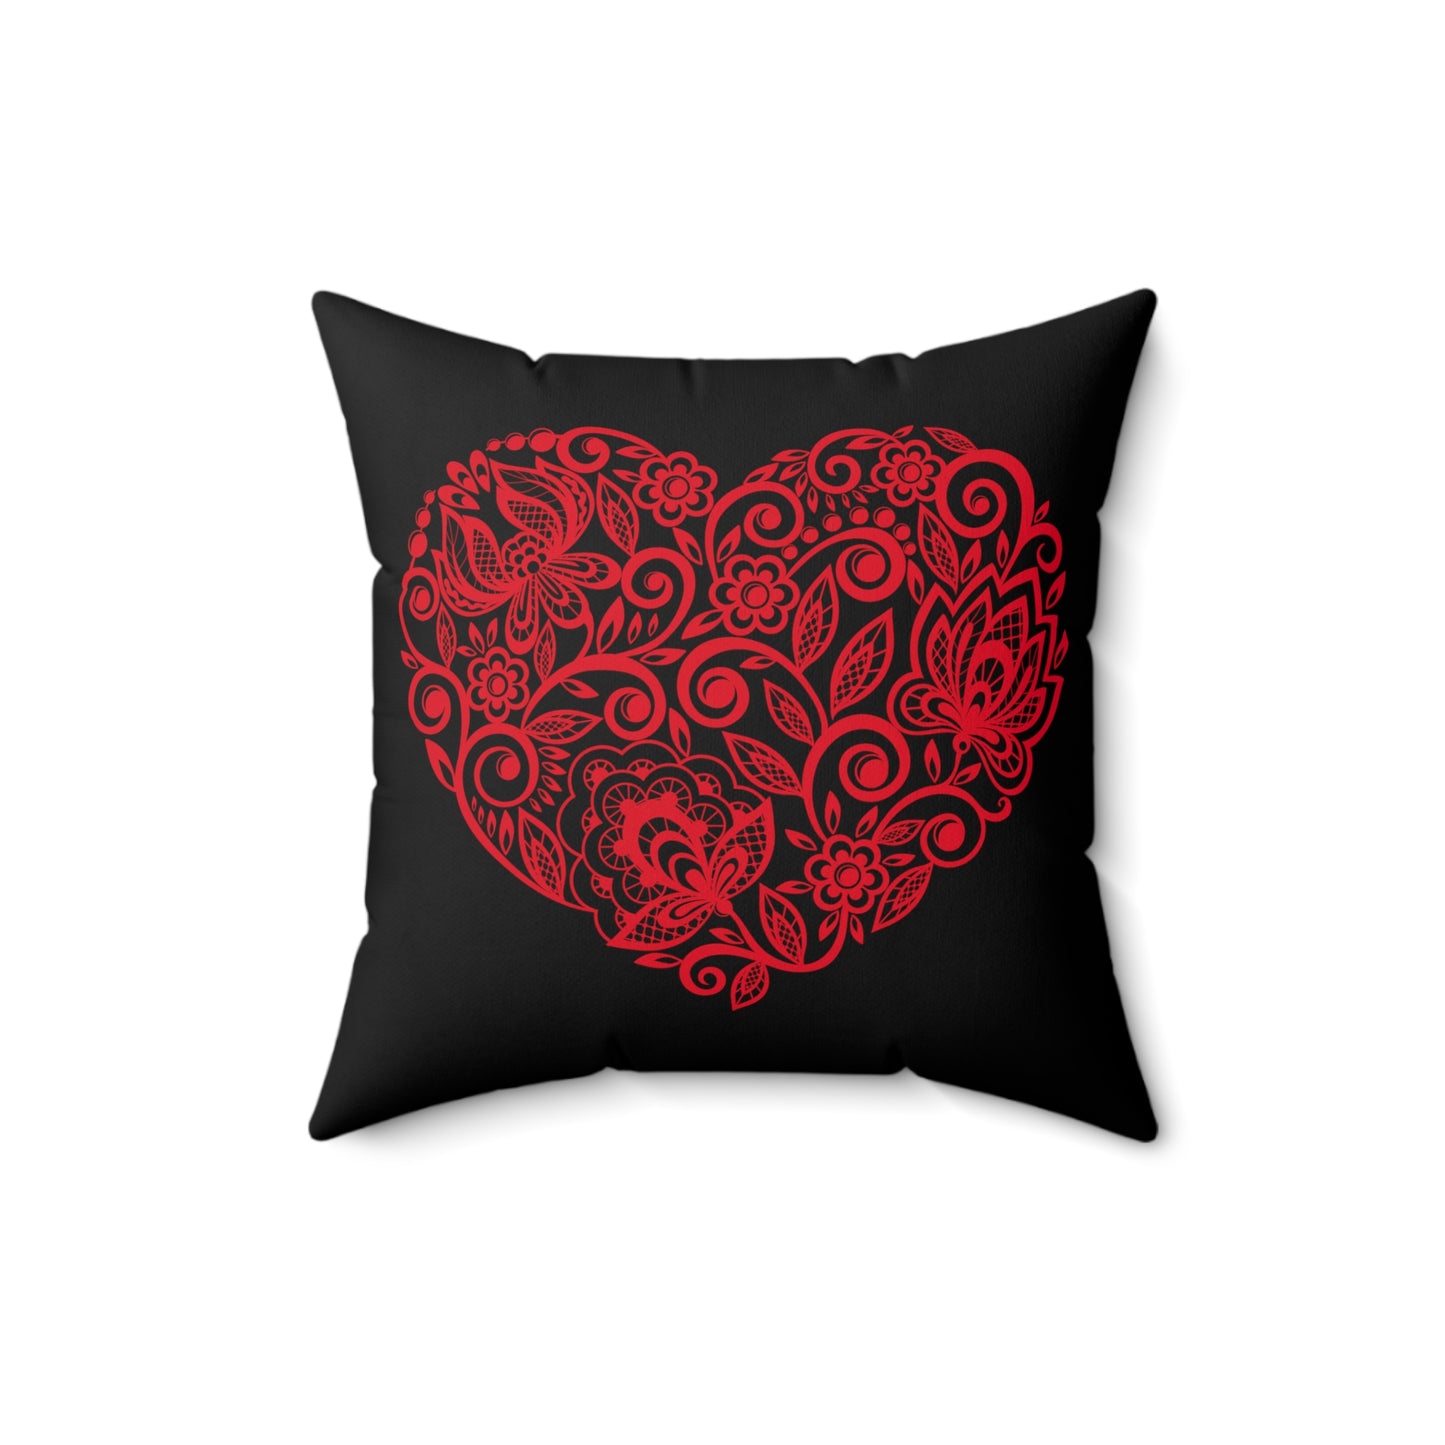 Decorator Pillow - Elegant Heart Design Spun Polyester Square Pillow